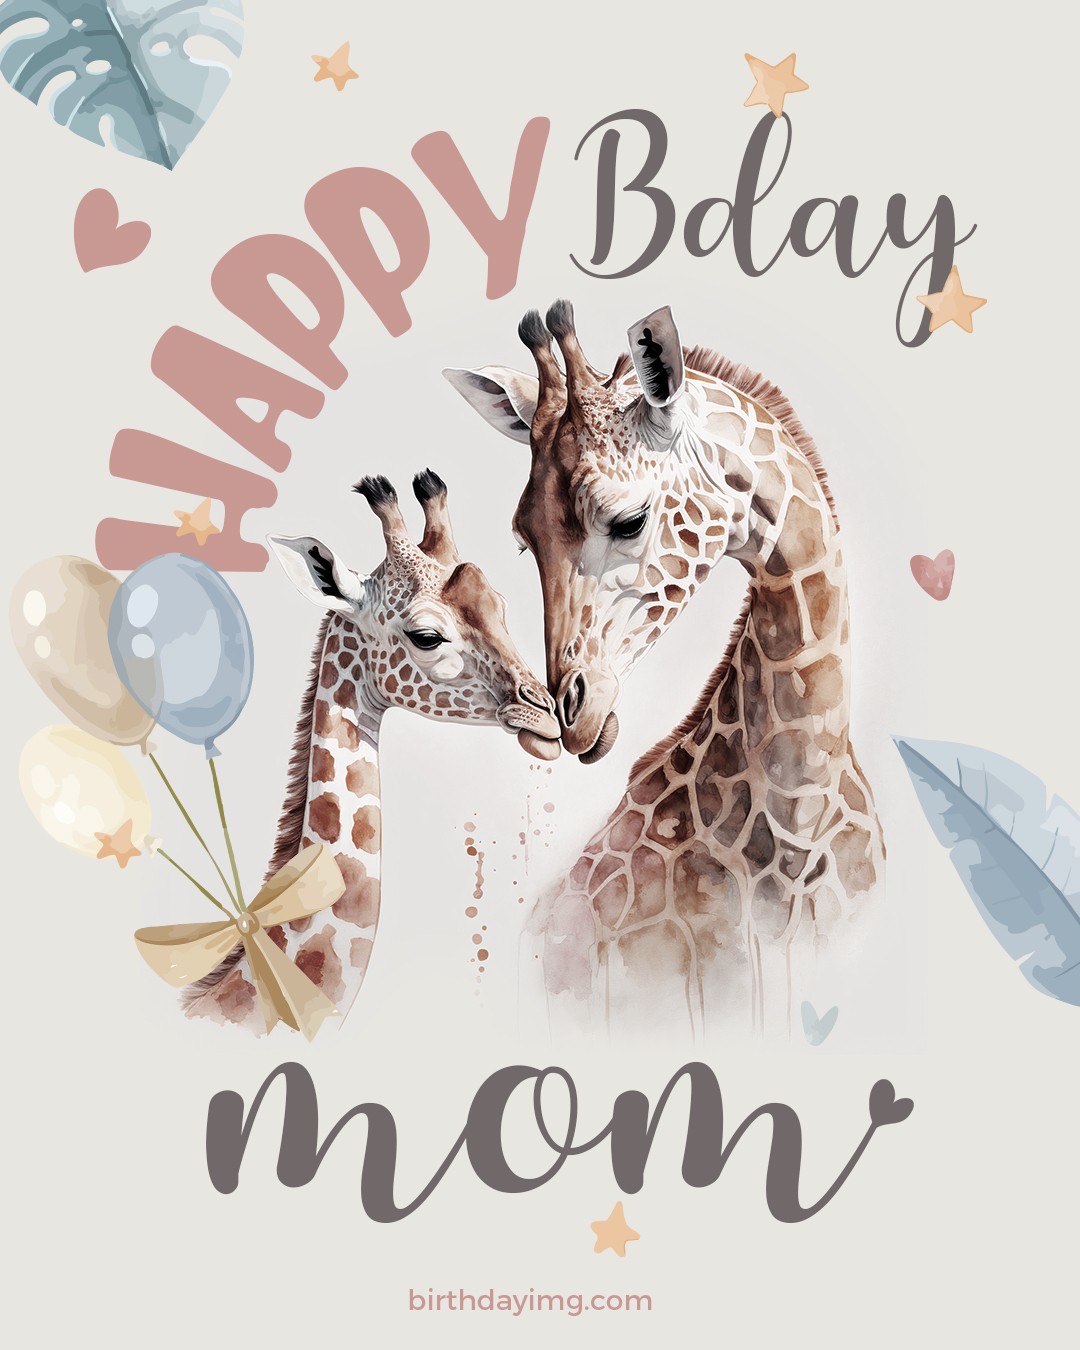 Free Happy Birthday Image for Mom with Giraffes - birthdayimg.com